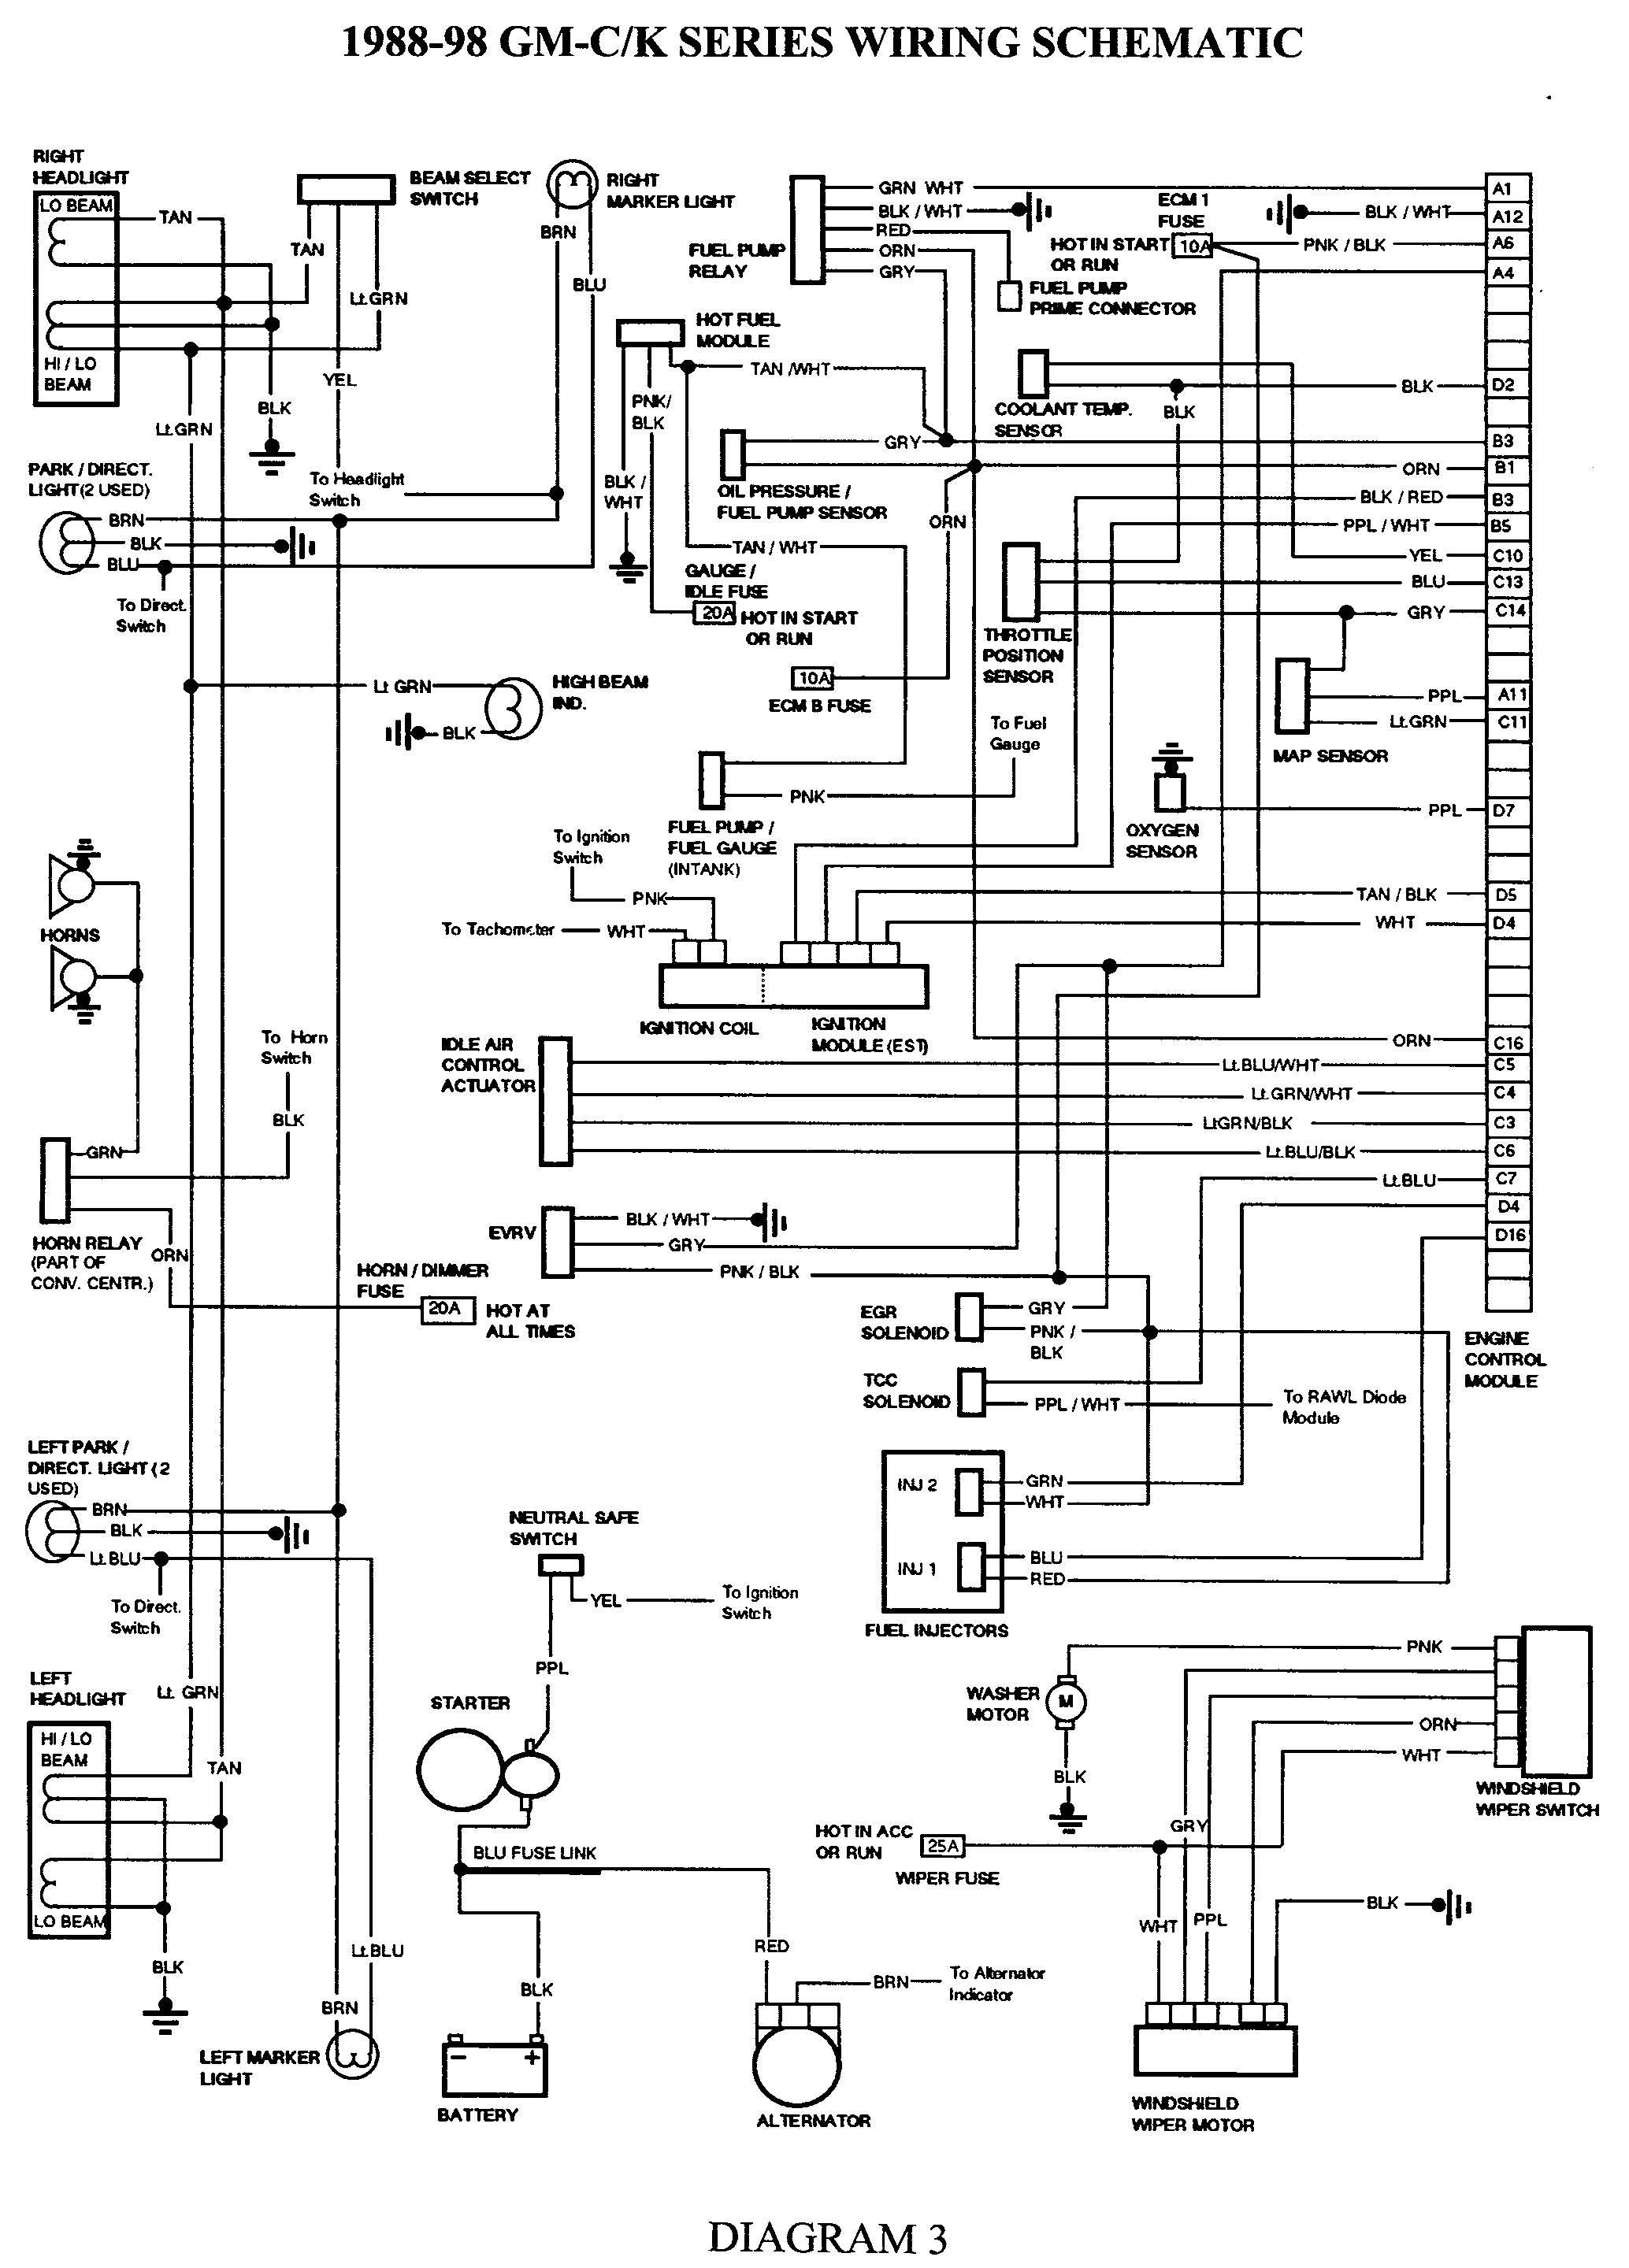 2003 toyota Camry Parts Diagram Wiring Diagram 2008 Tahoe Experts Wiring Diagram • Of 2003 toyota Camry Parts Diagram